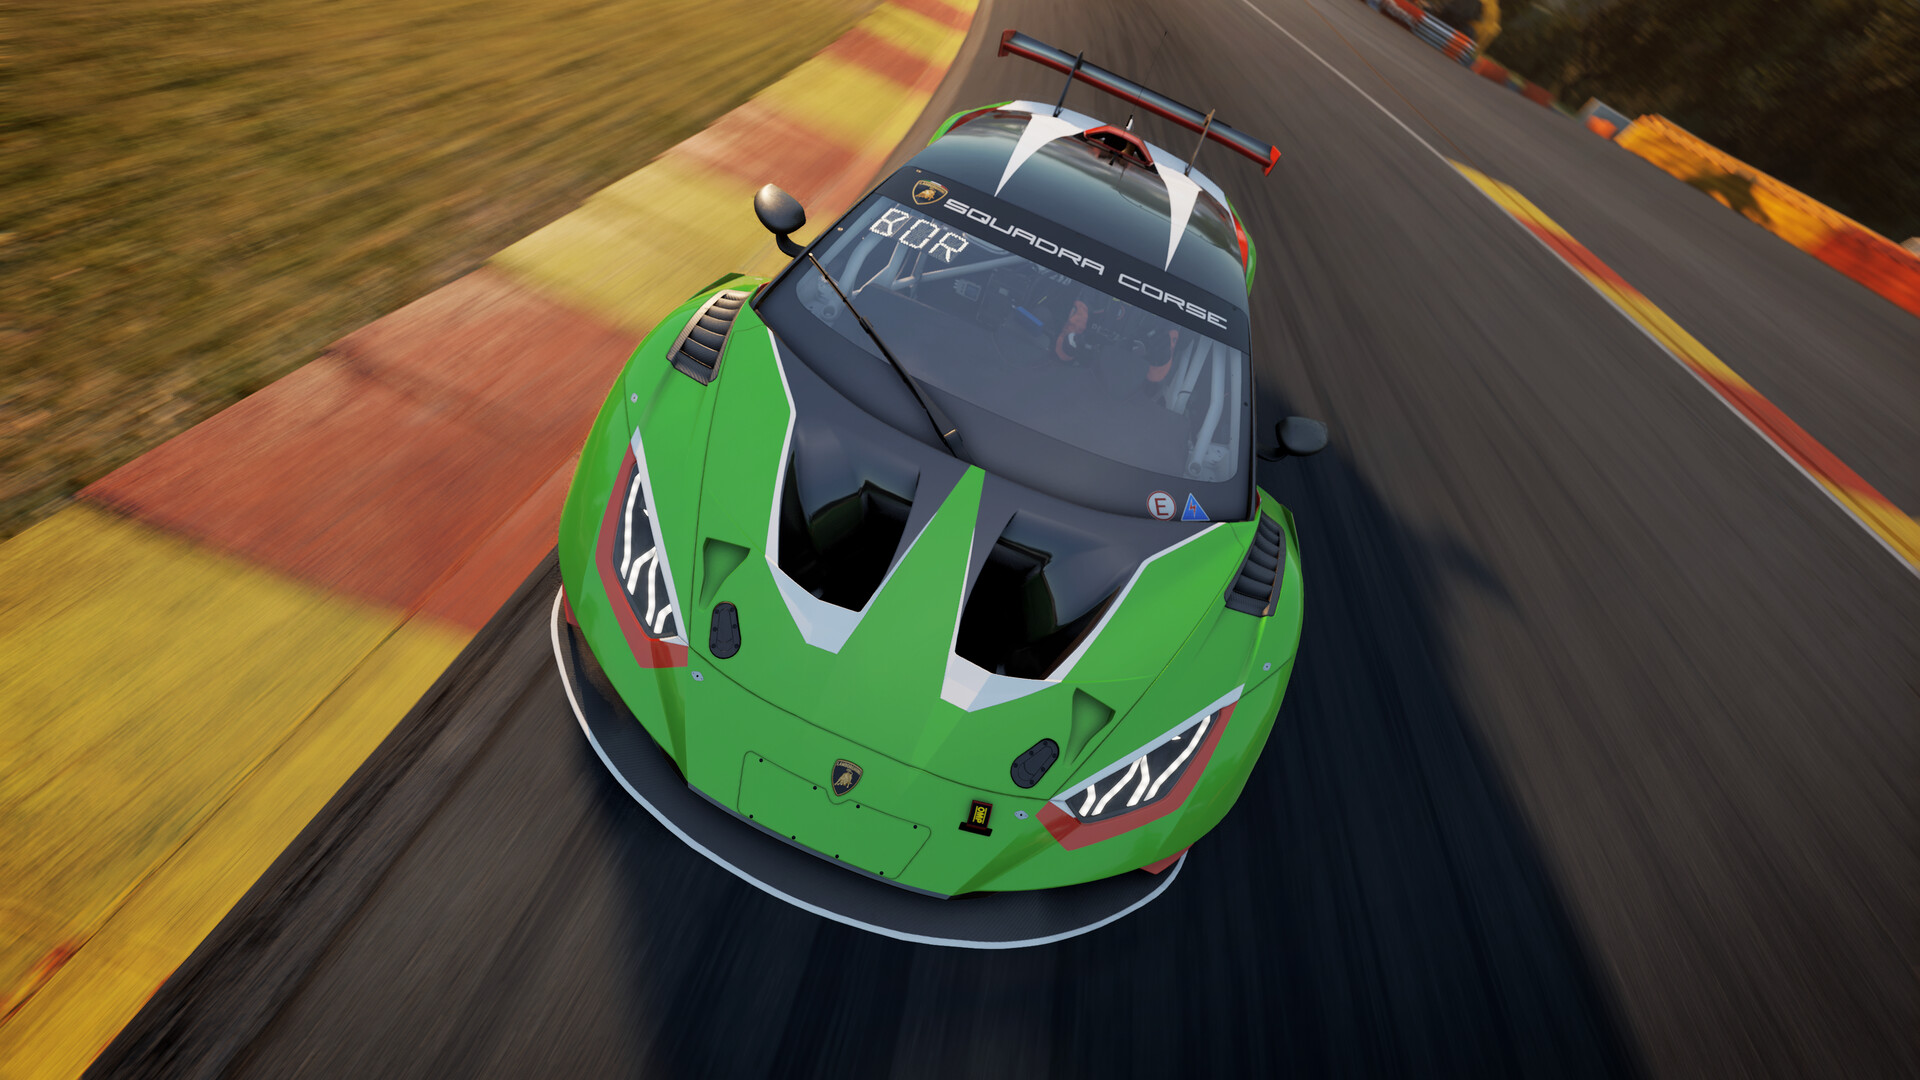 Assetto Corsa Competizione - 2023 GT World Challenge Pack DLC Steam Altergift